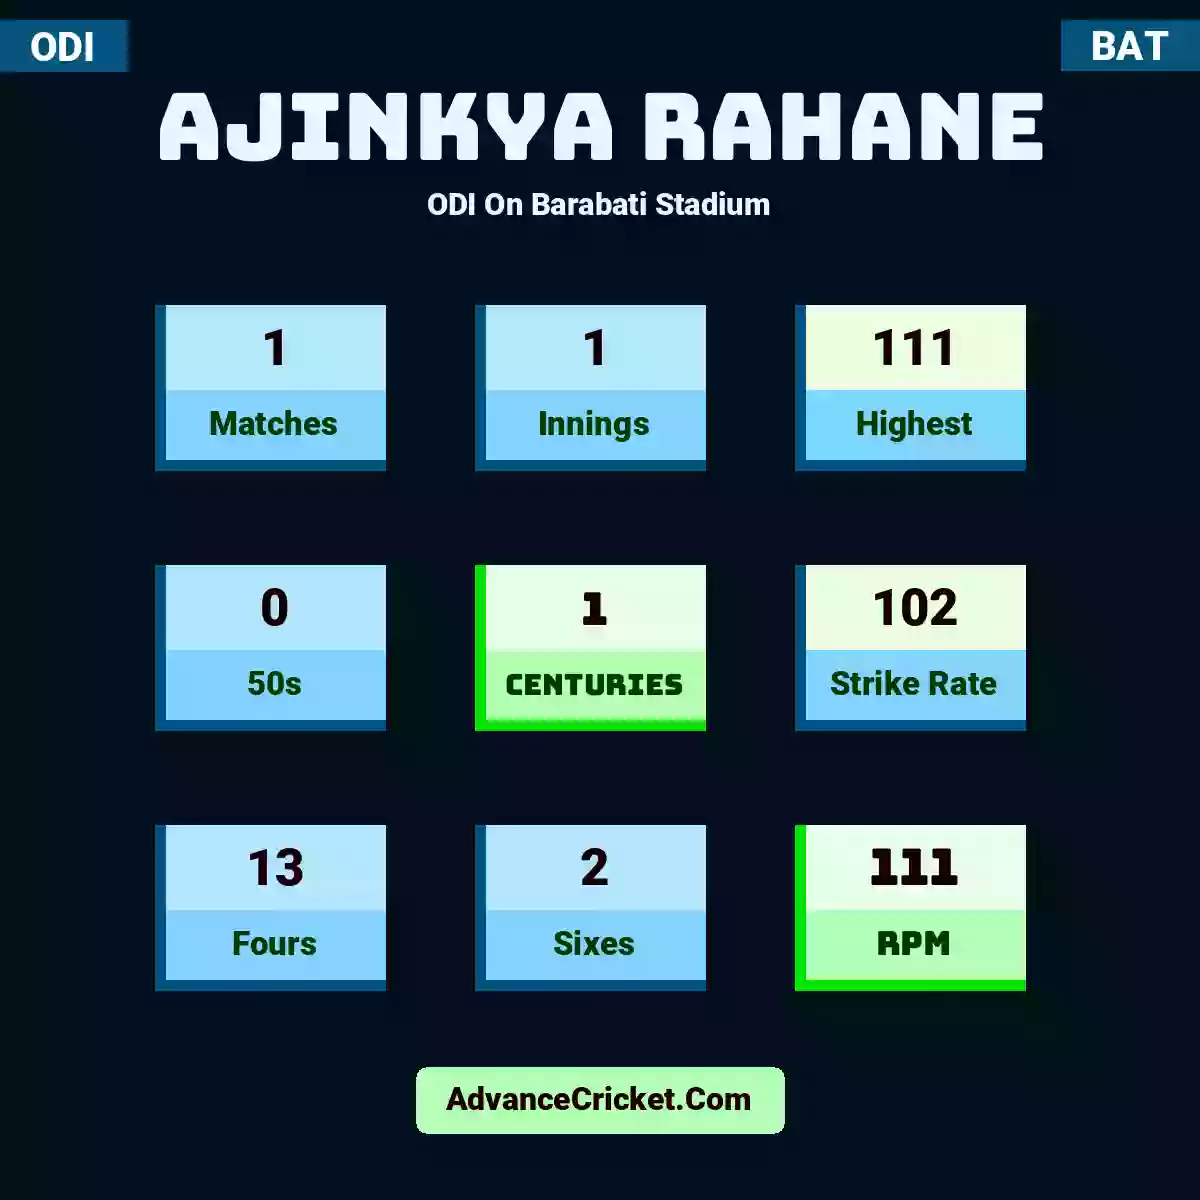 Ajinkya Rahane ODI  On Barabati Stadium, Ajinkya Rahane played 1 matches, scored 111 runs as highest, 0 half-centuries, and 1 centuries, with a strike rate of 102. A.Rahane hit 13 fours and 2 sixes, with an RPM of 111.